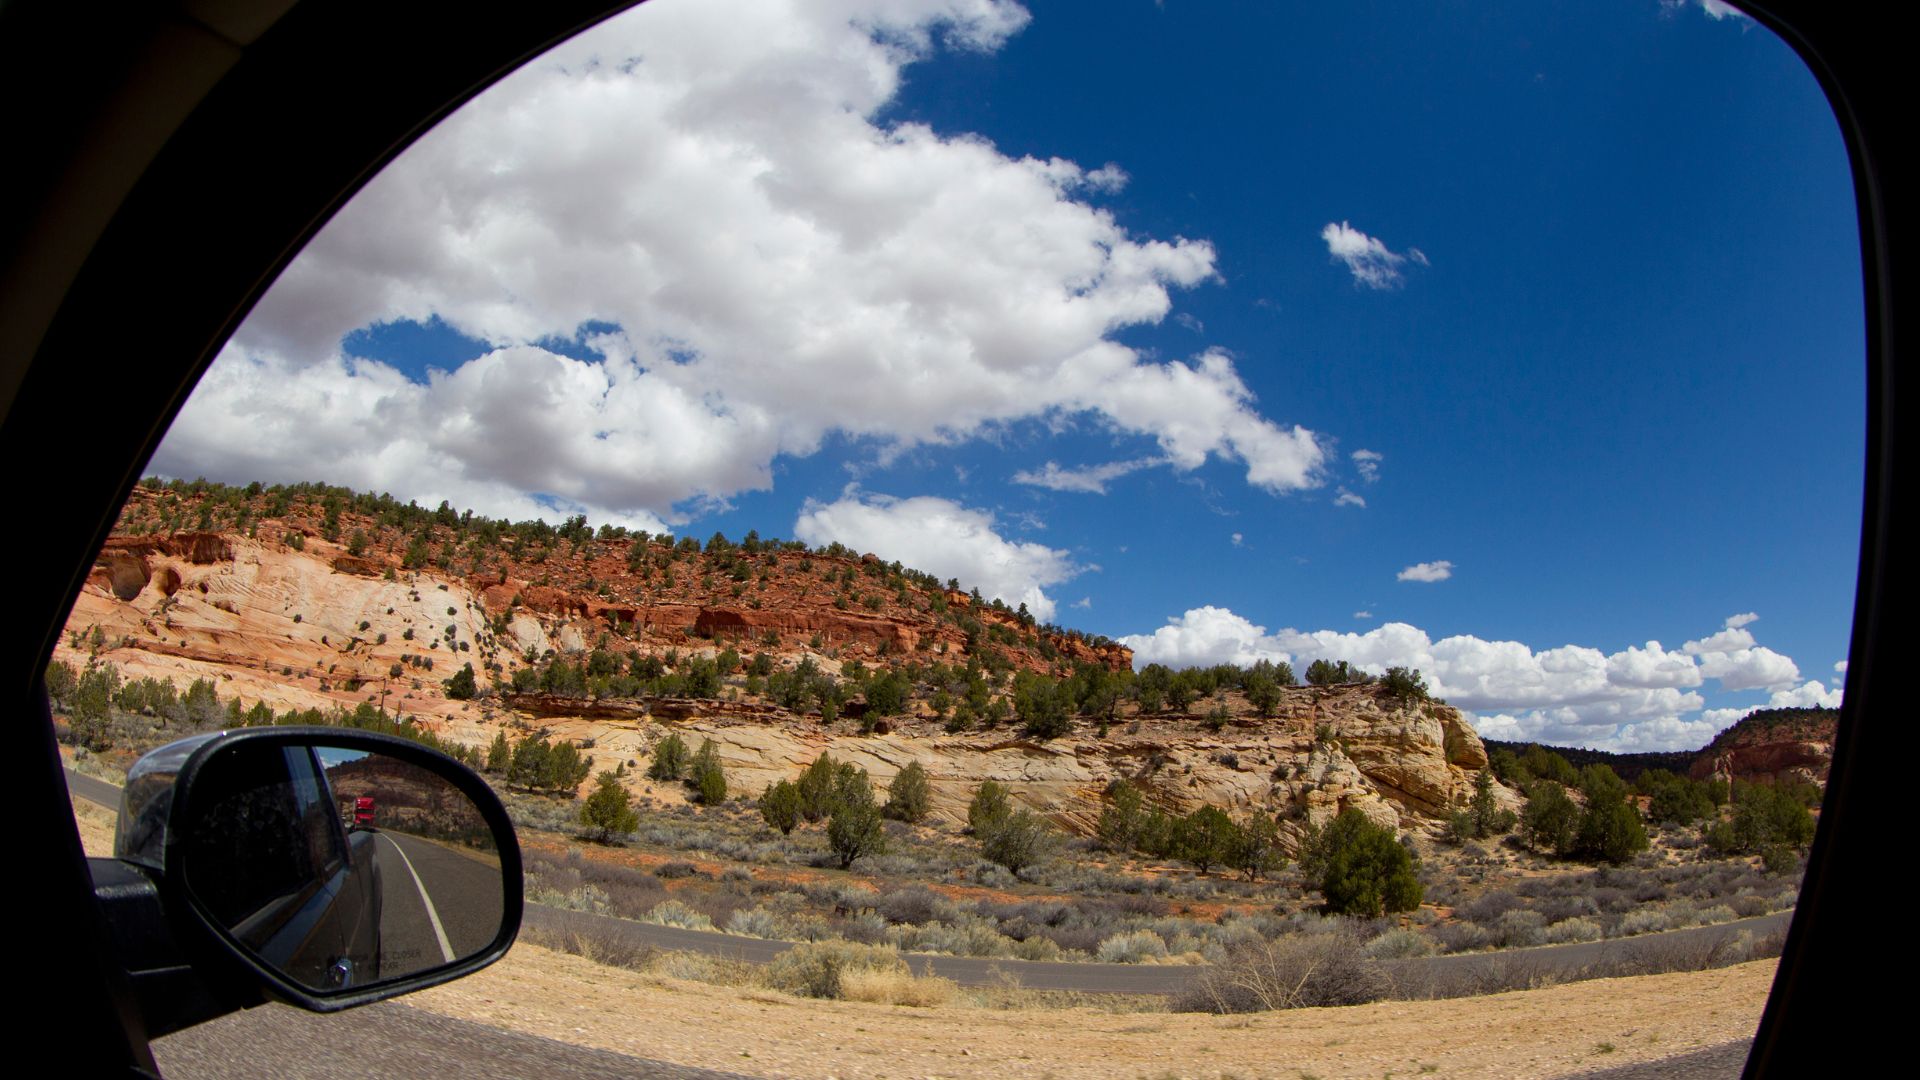 A view of the mountains as seen through a car window.